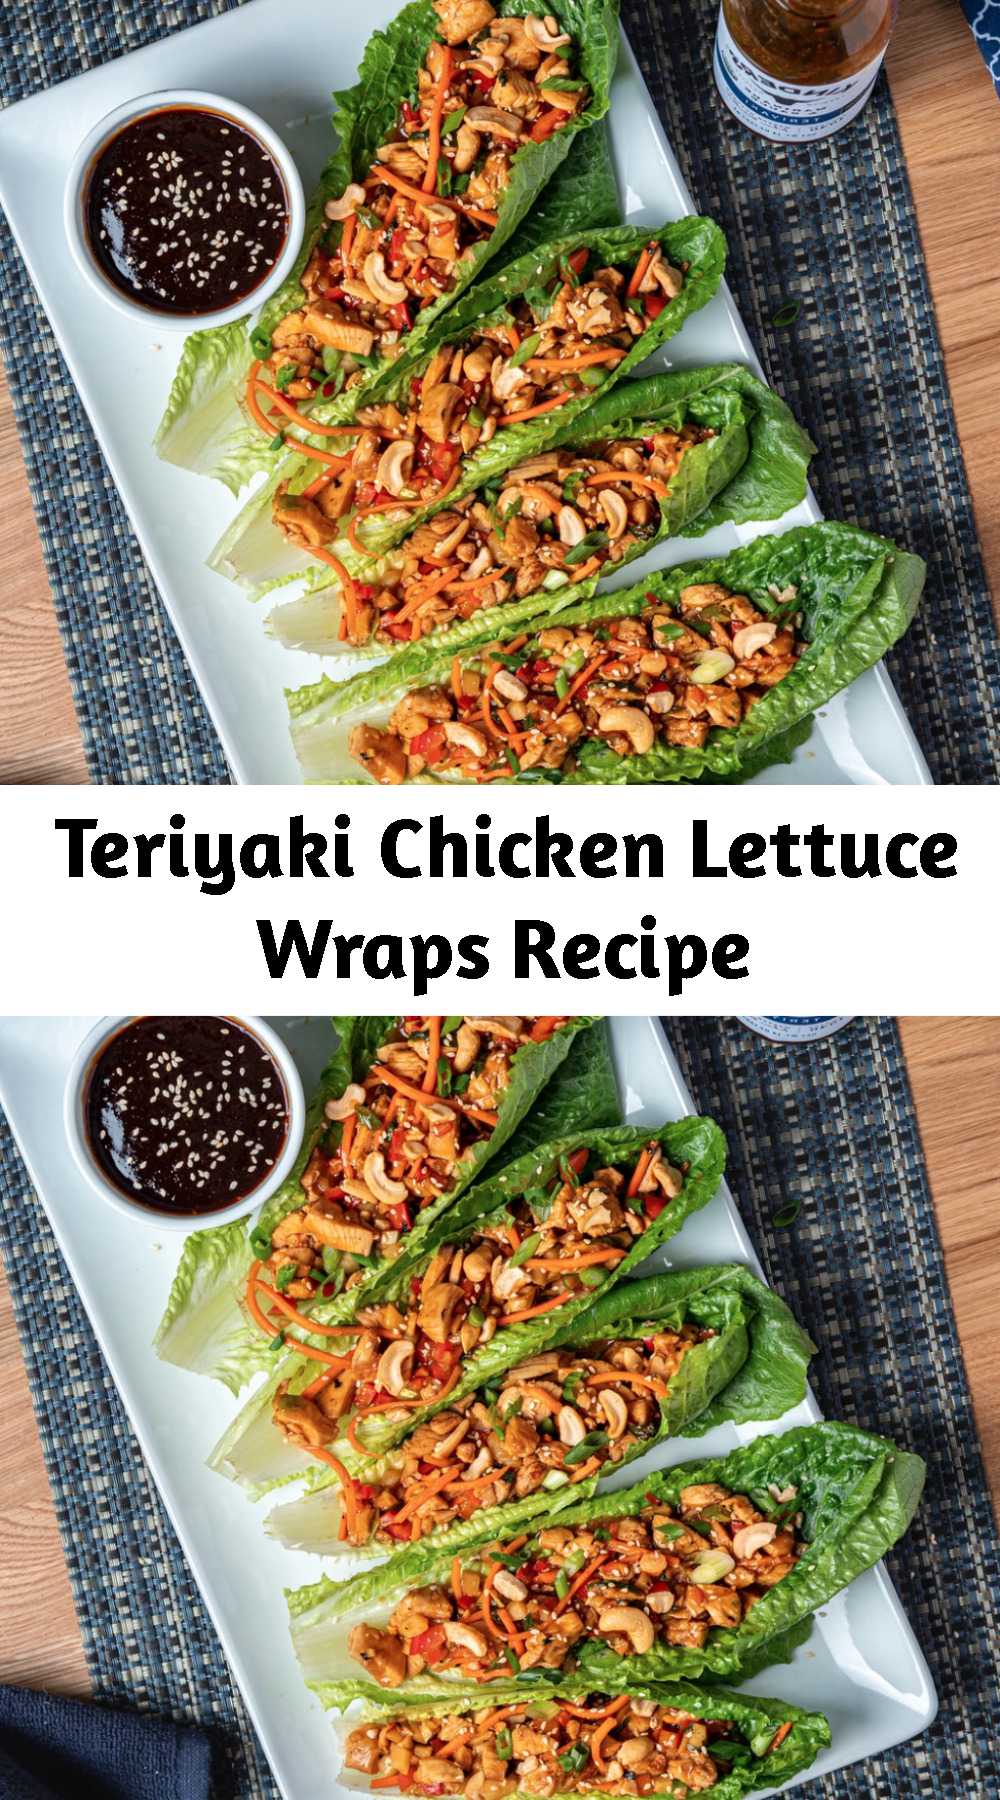 Teriyaki Chicken Lettuce Wraps Recipe - Delicious lettuce wraps made in 30 minutes!